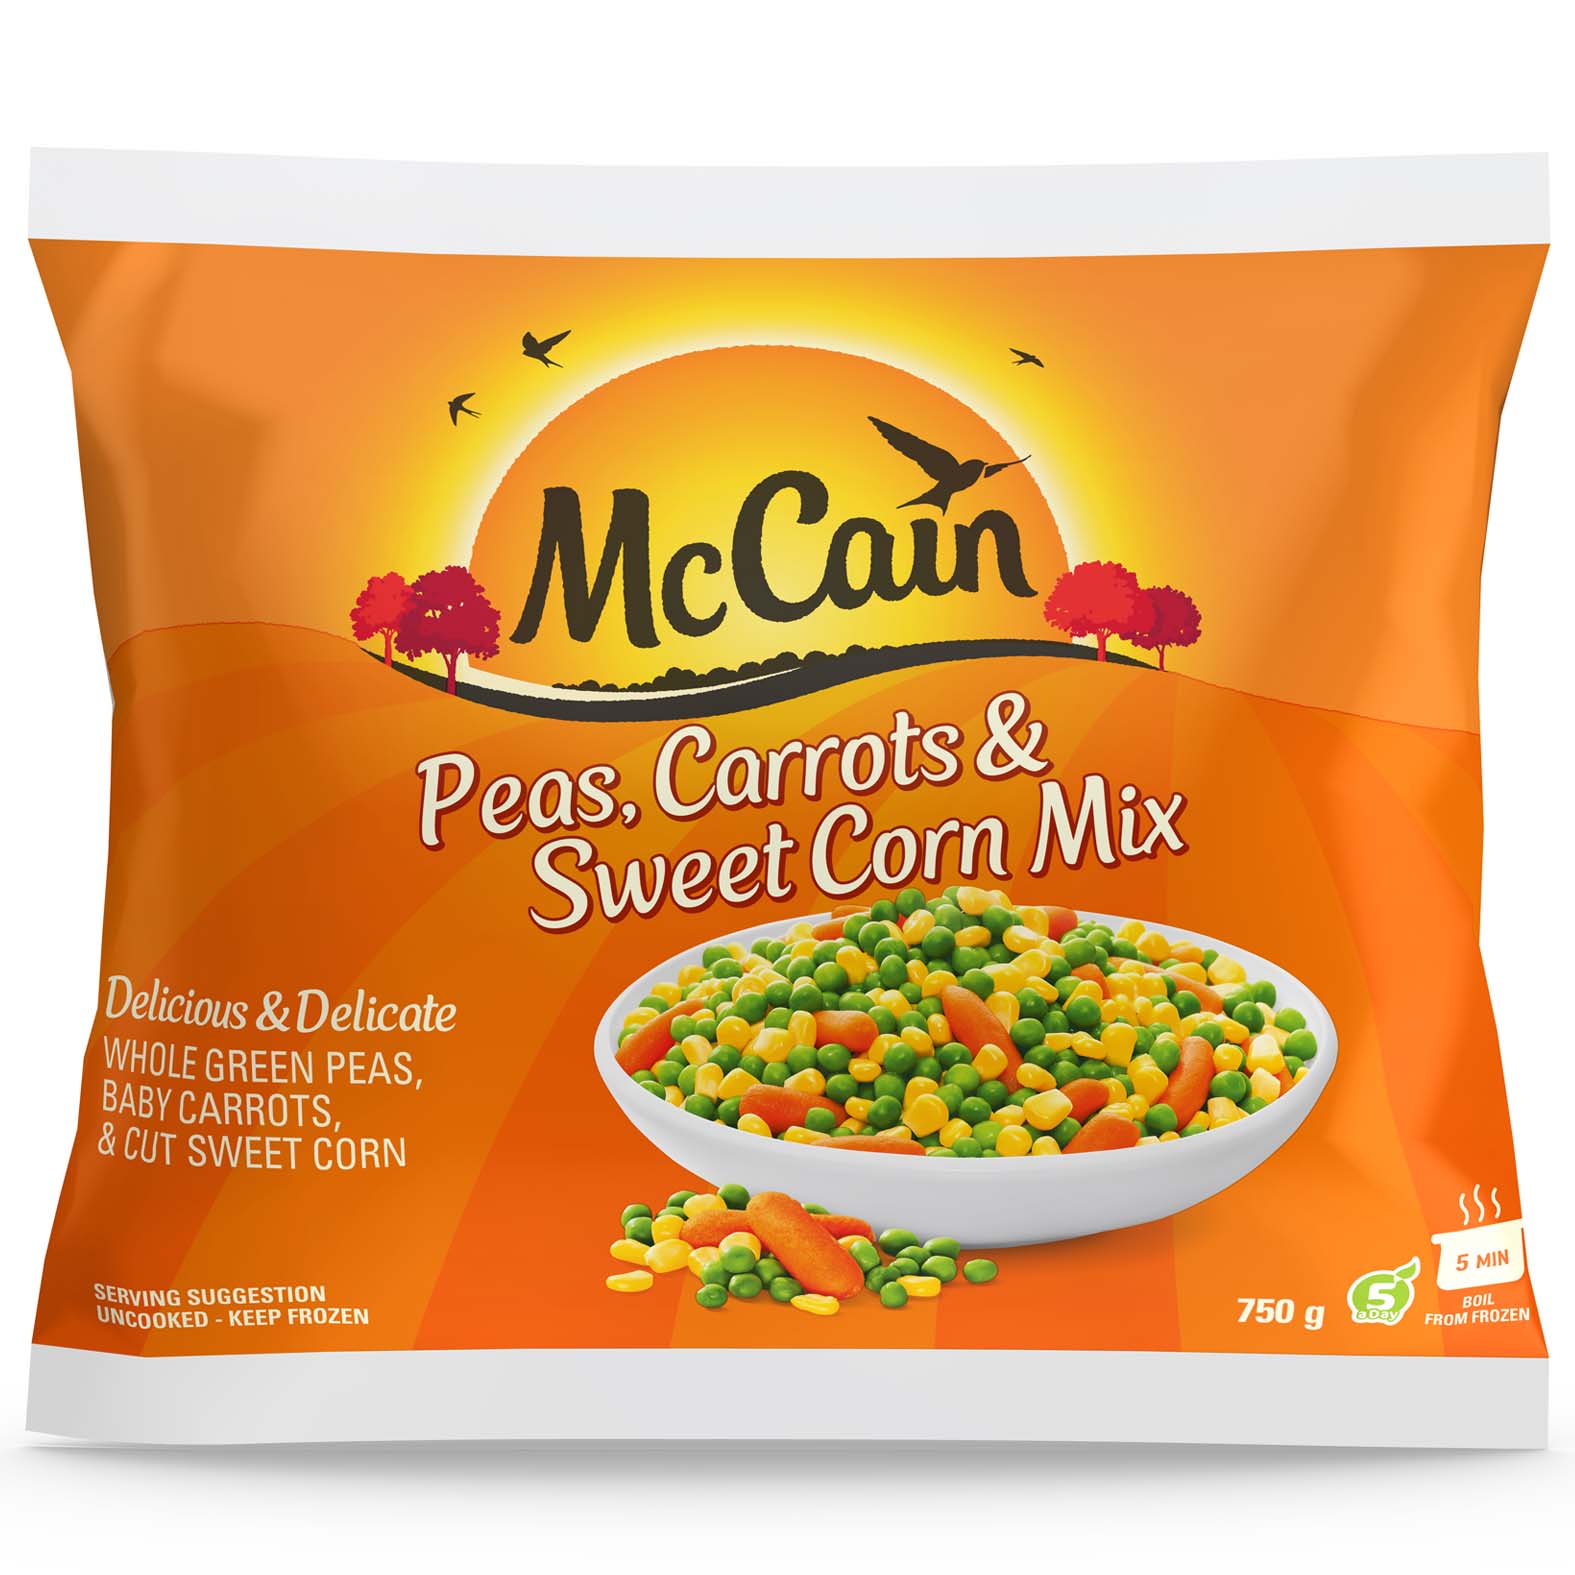 Peas, Carrots & Corn 750g Pack Photo